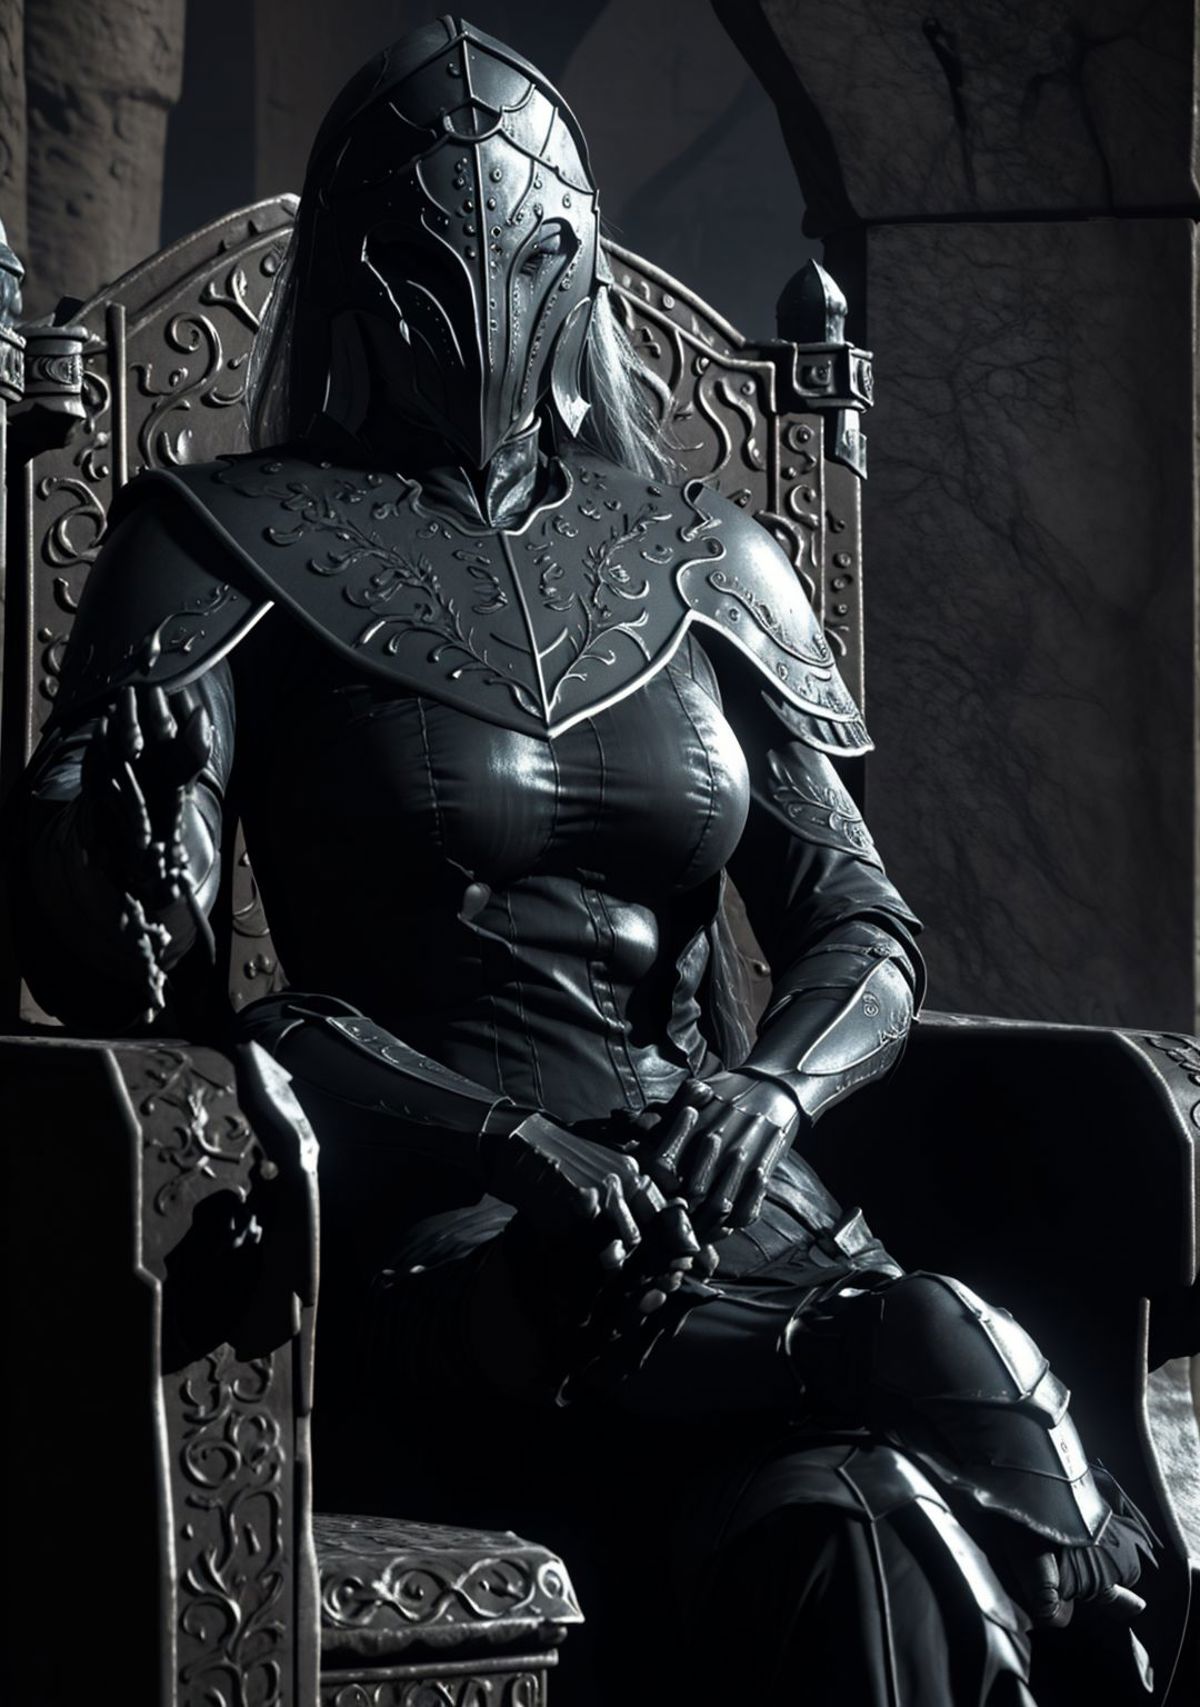 Yuria of Londor | Dark Souls 3 image by marusame